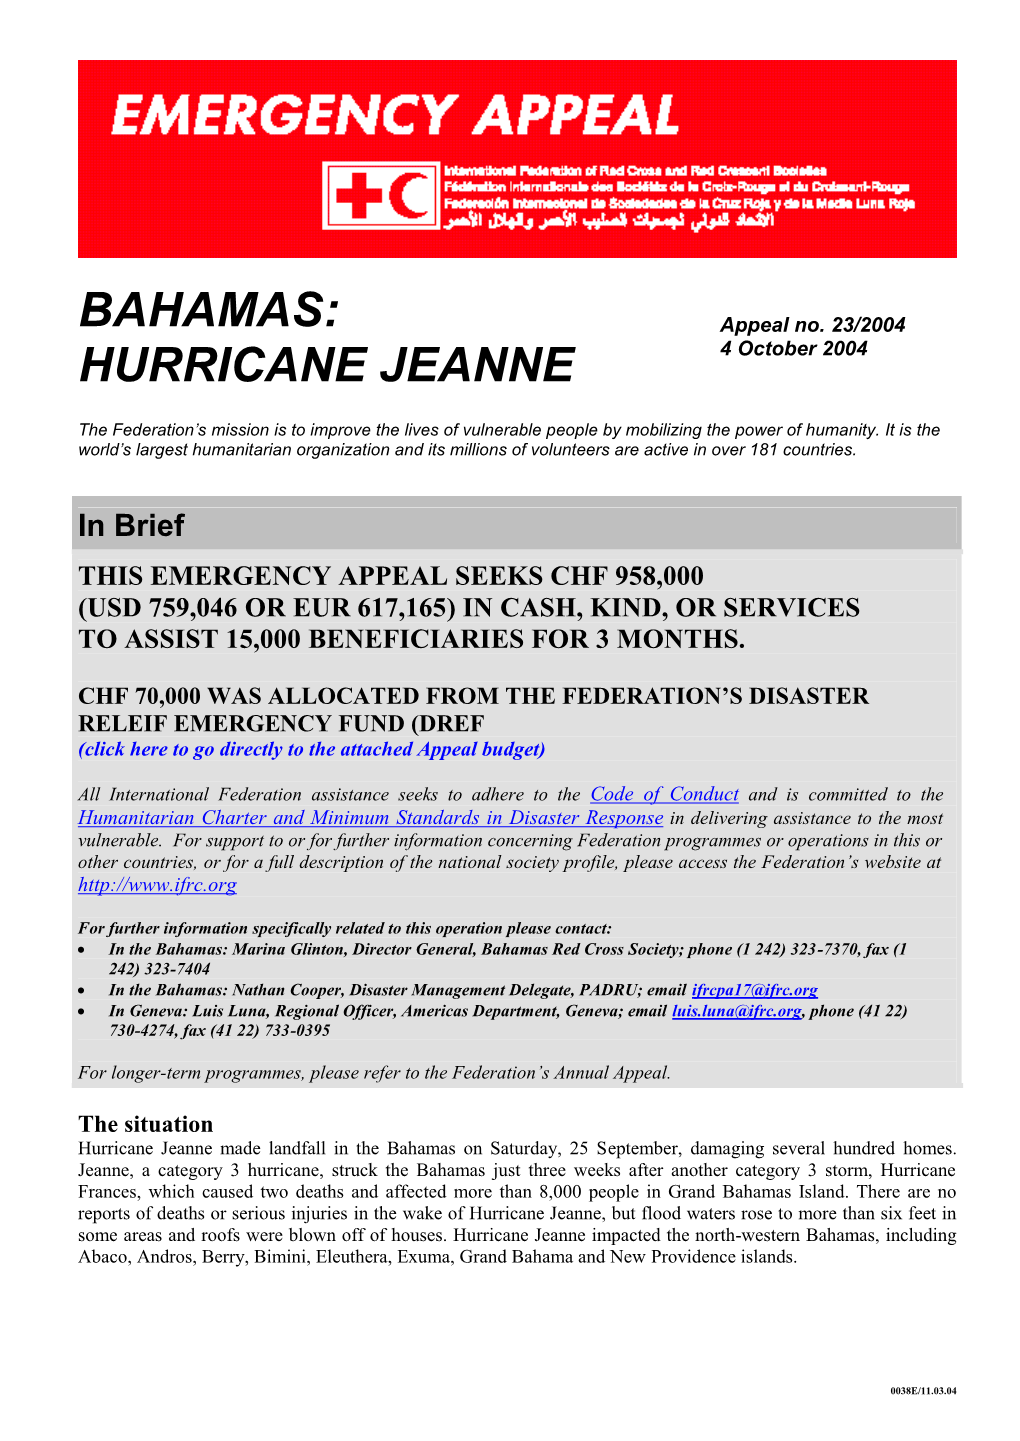 Bahamas: Hurricane Jeanne